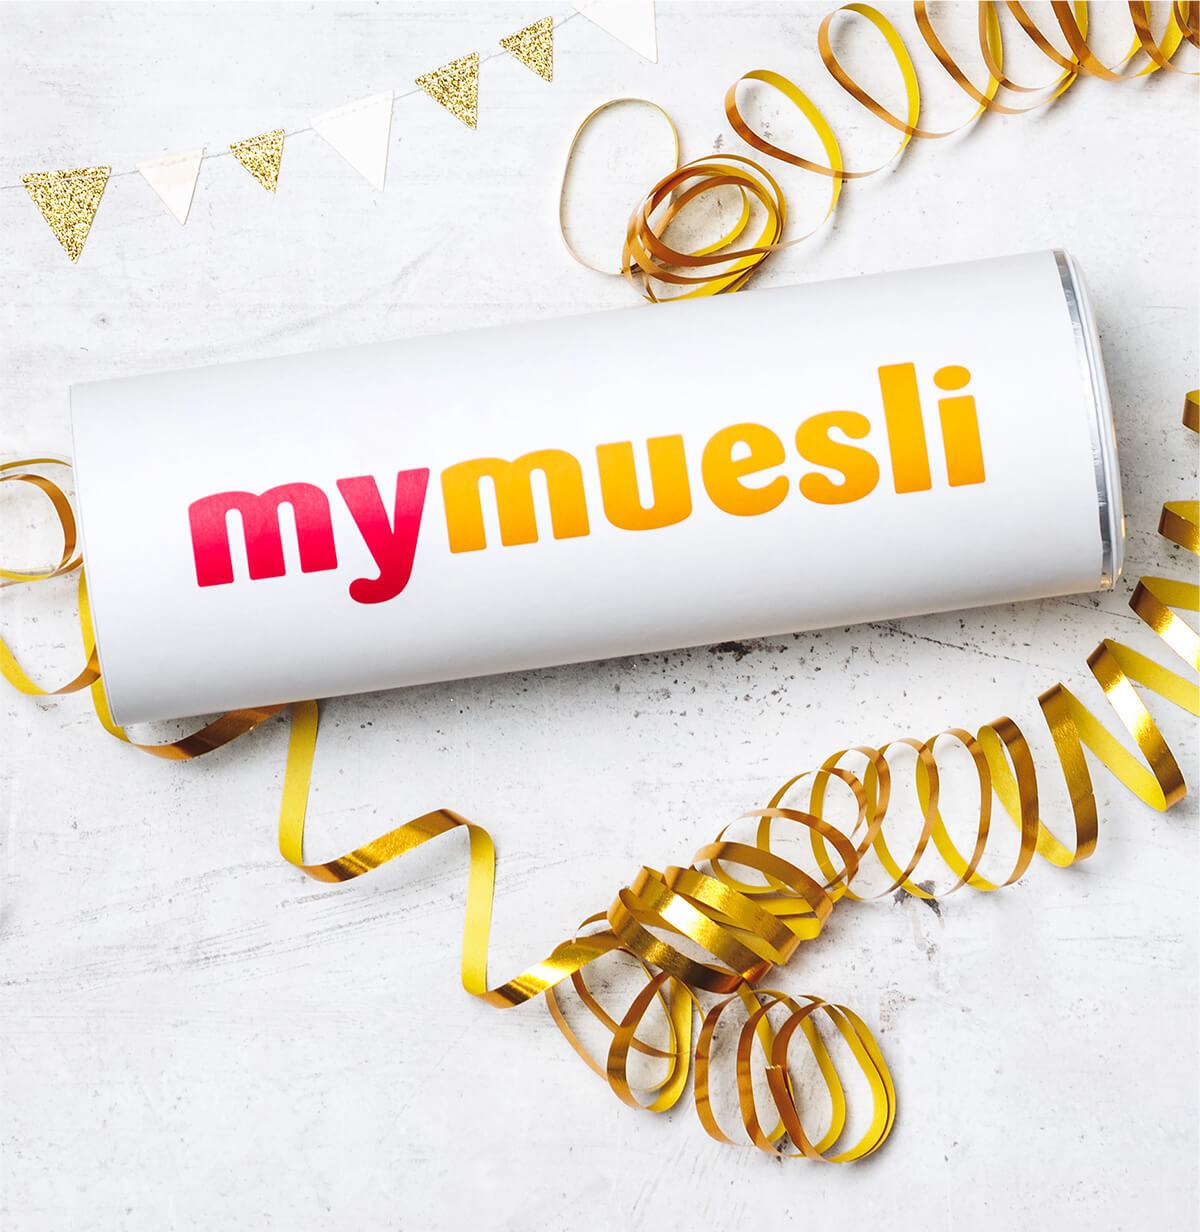 Mymuesli - Muesli offert* jusqu'à 13 euros - Just Eat